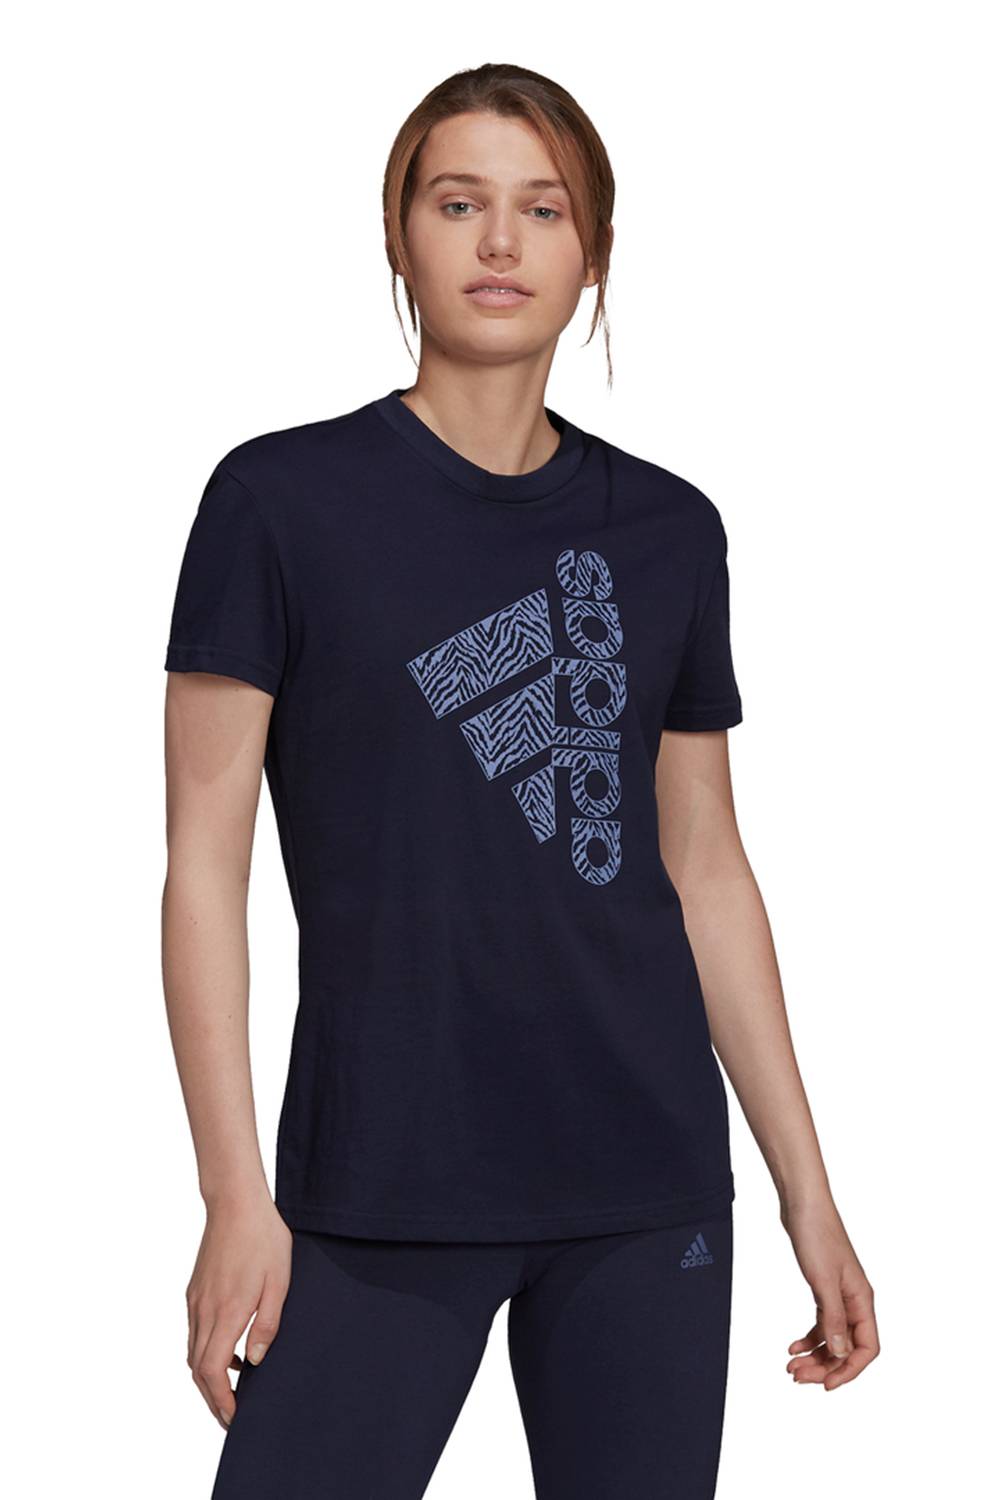 Adidas - Camiseta Deportiva Adidas Mujer